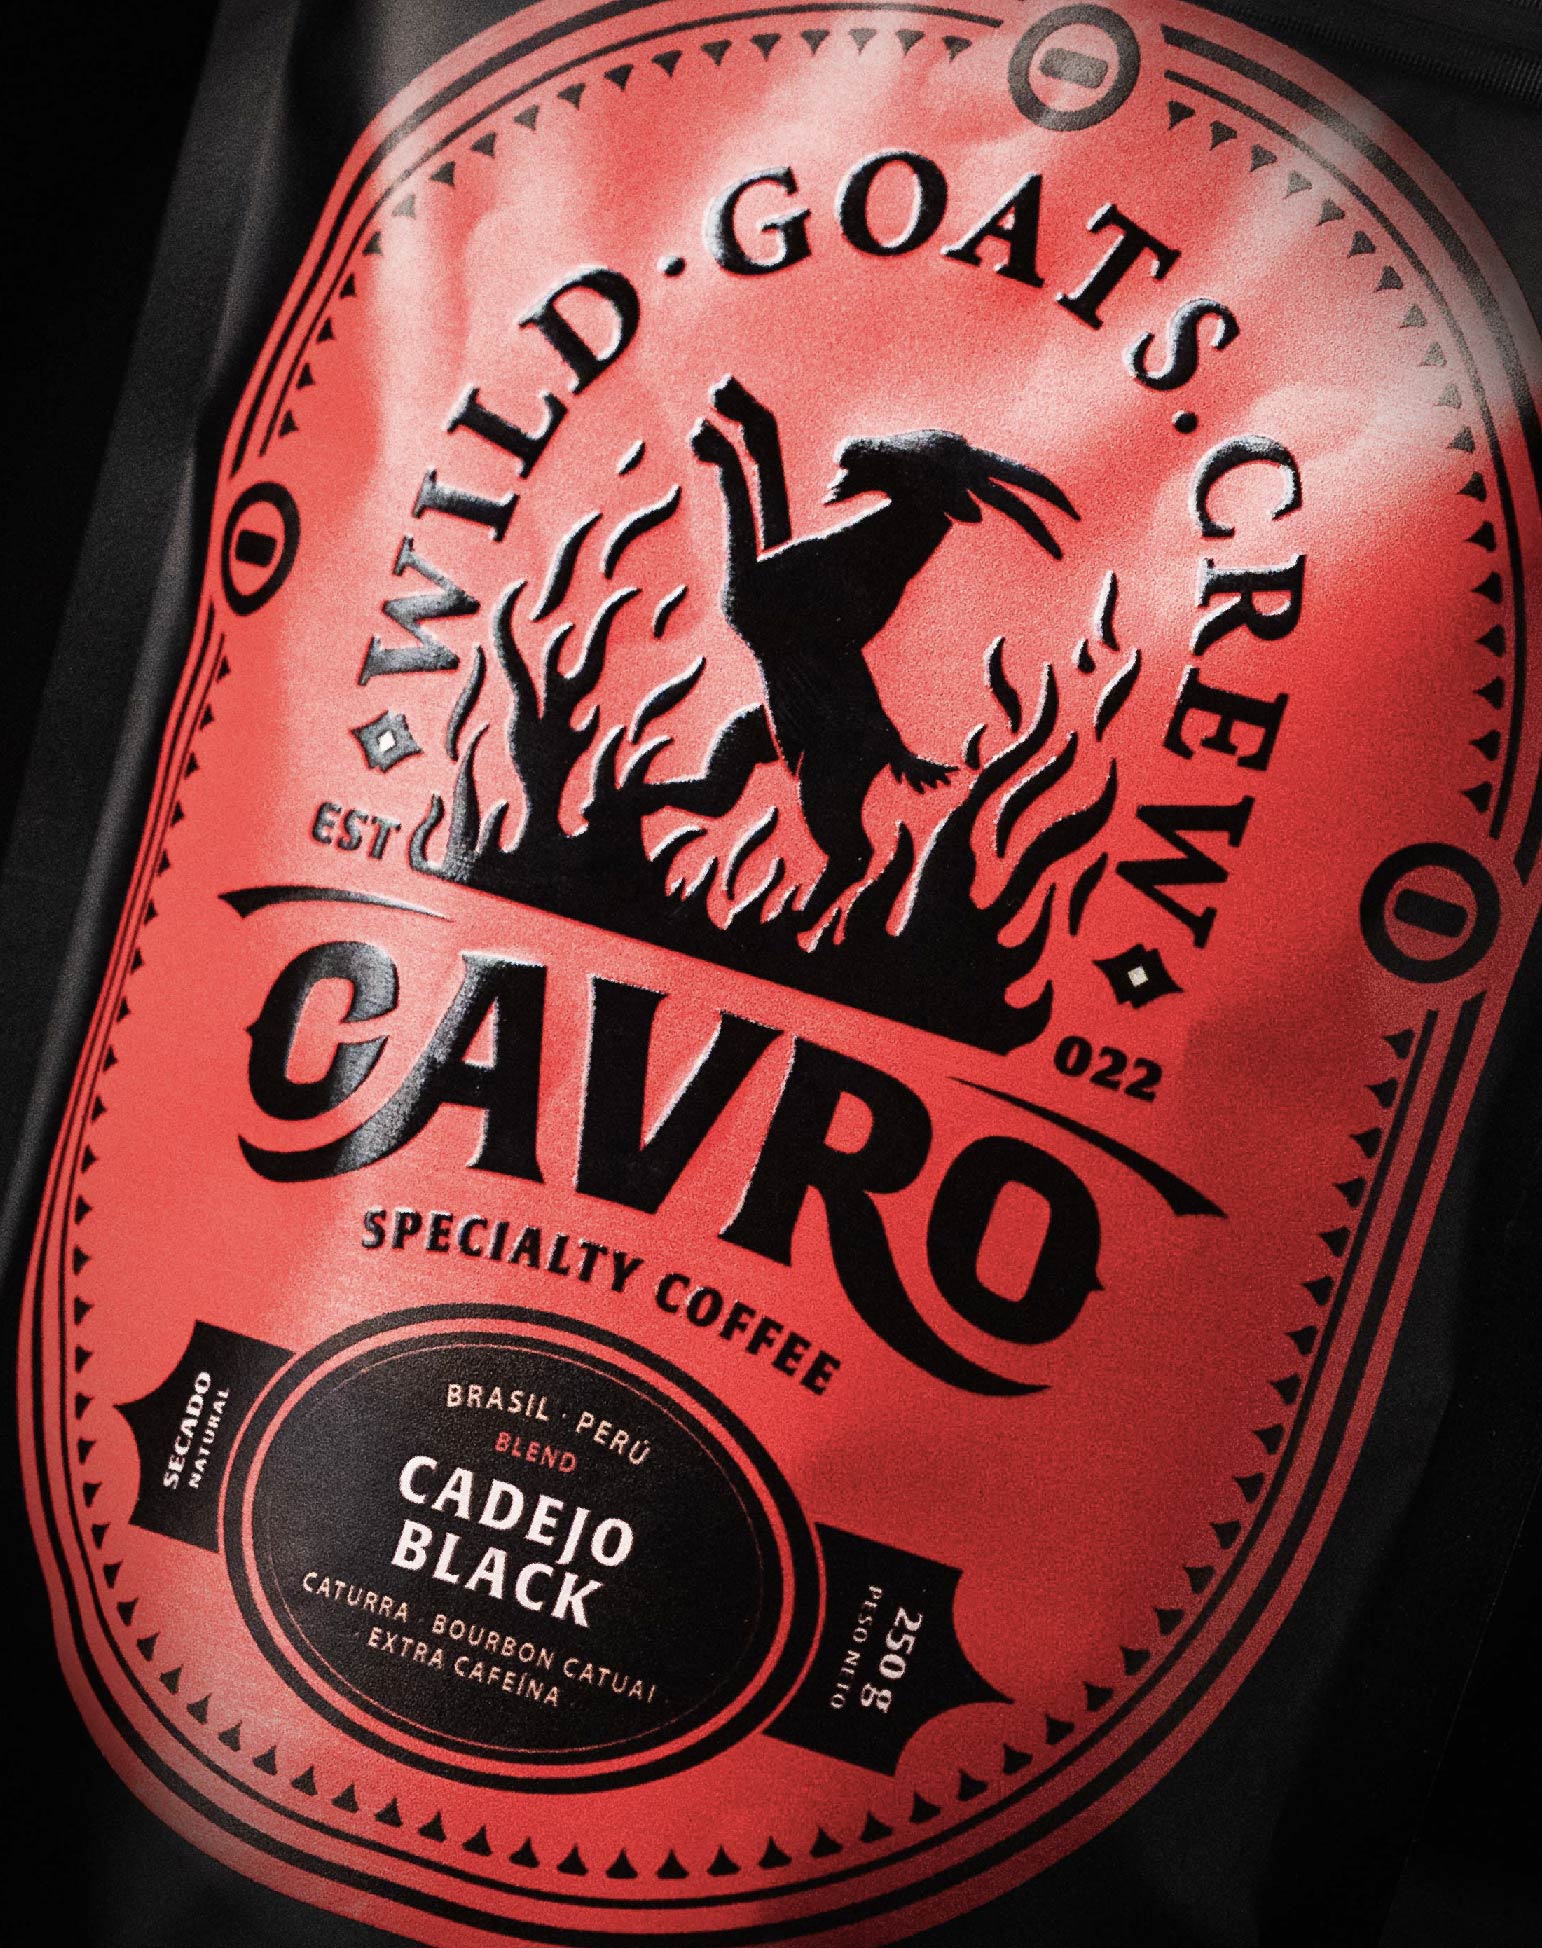 Cavro Specialty Coffee Packaging Design Created by Vantablack Studio